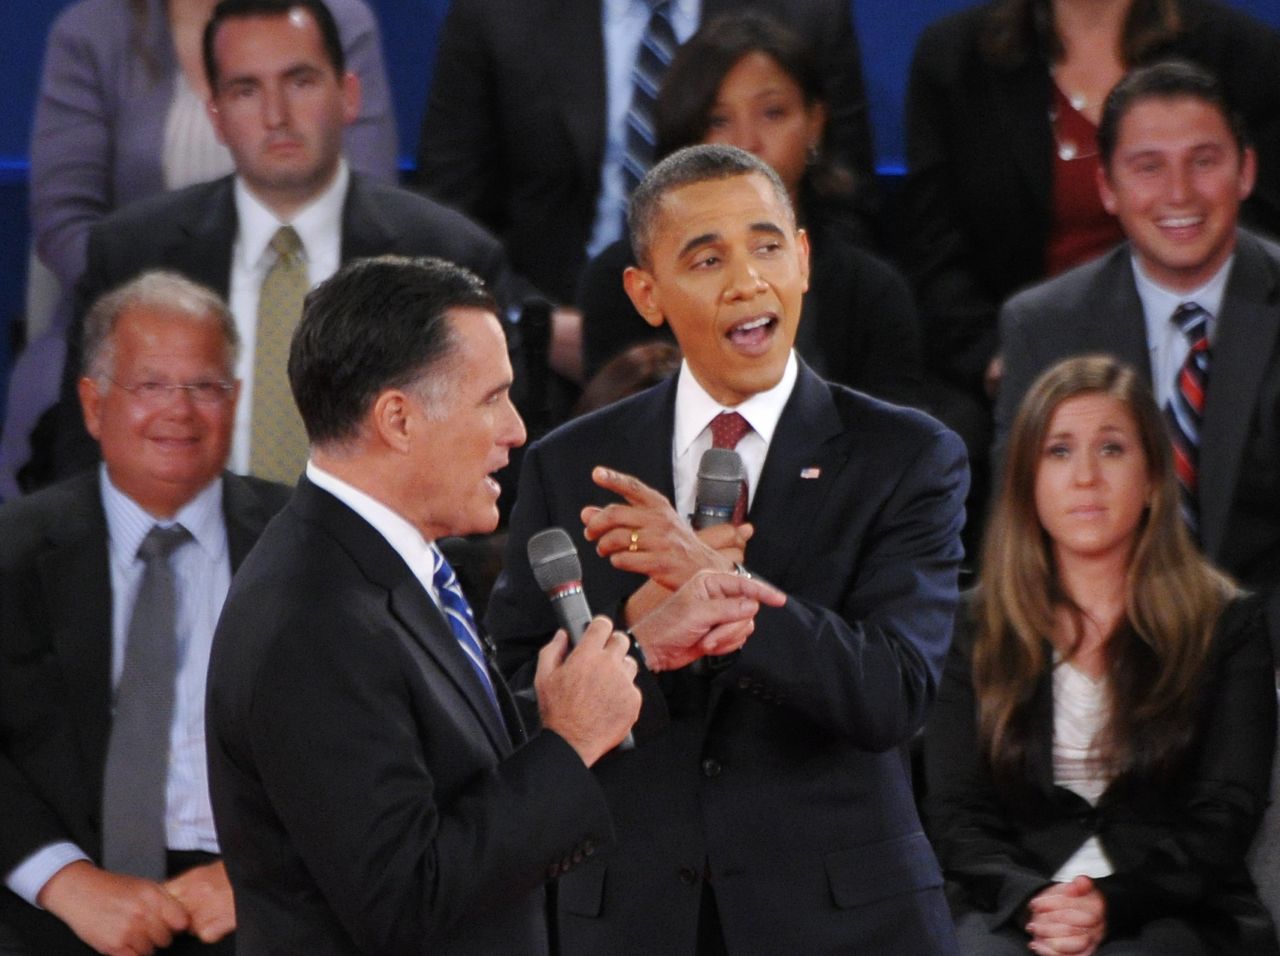 U.S. President Barack Obama and Republican presidential candidate Mitt Romney speak over each other.